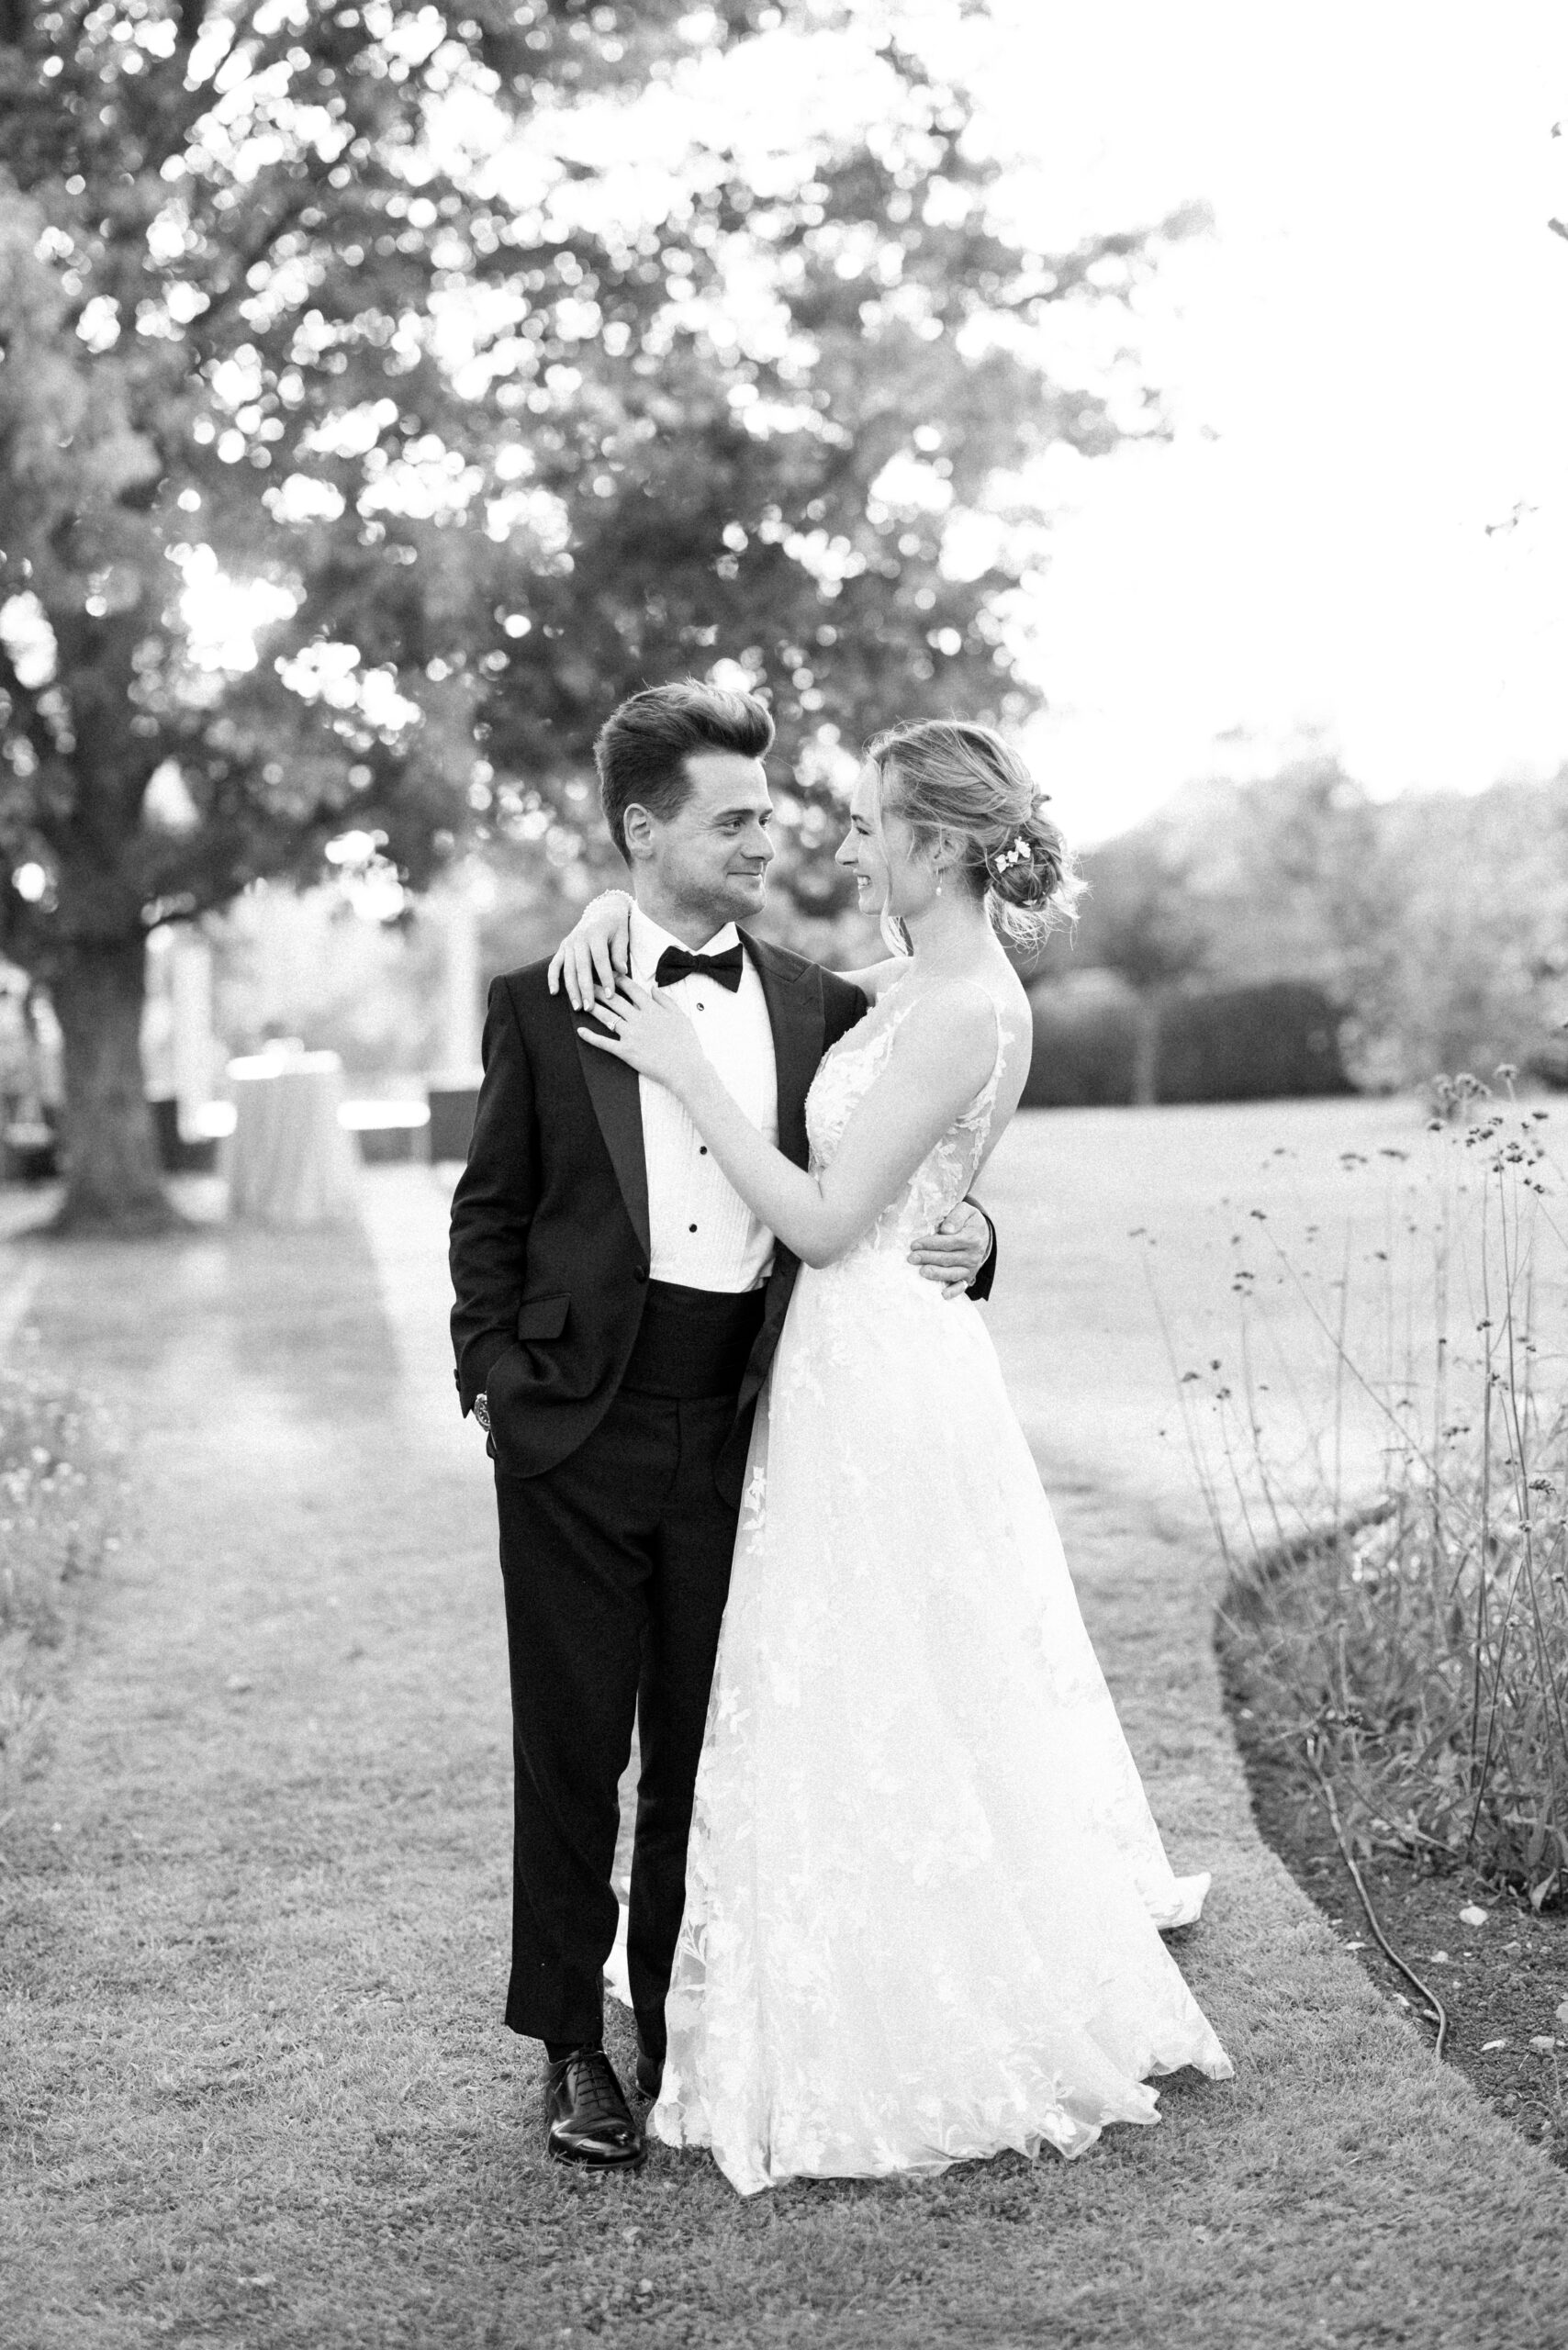 Romantic & Elegant Wedding Photography at luxury english country garden wedding